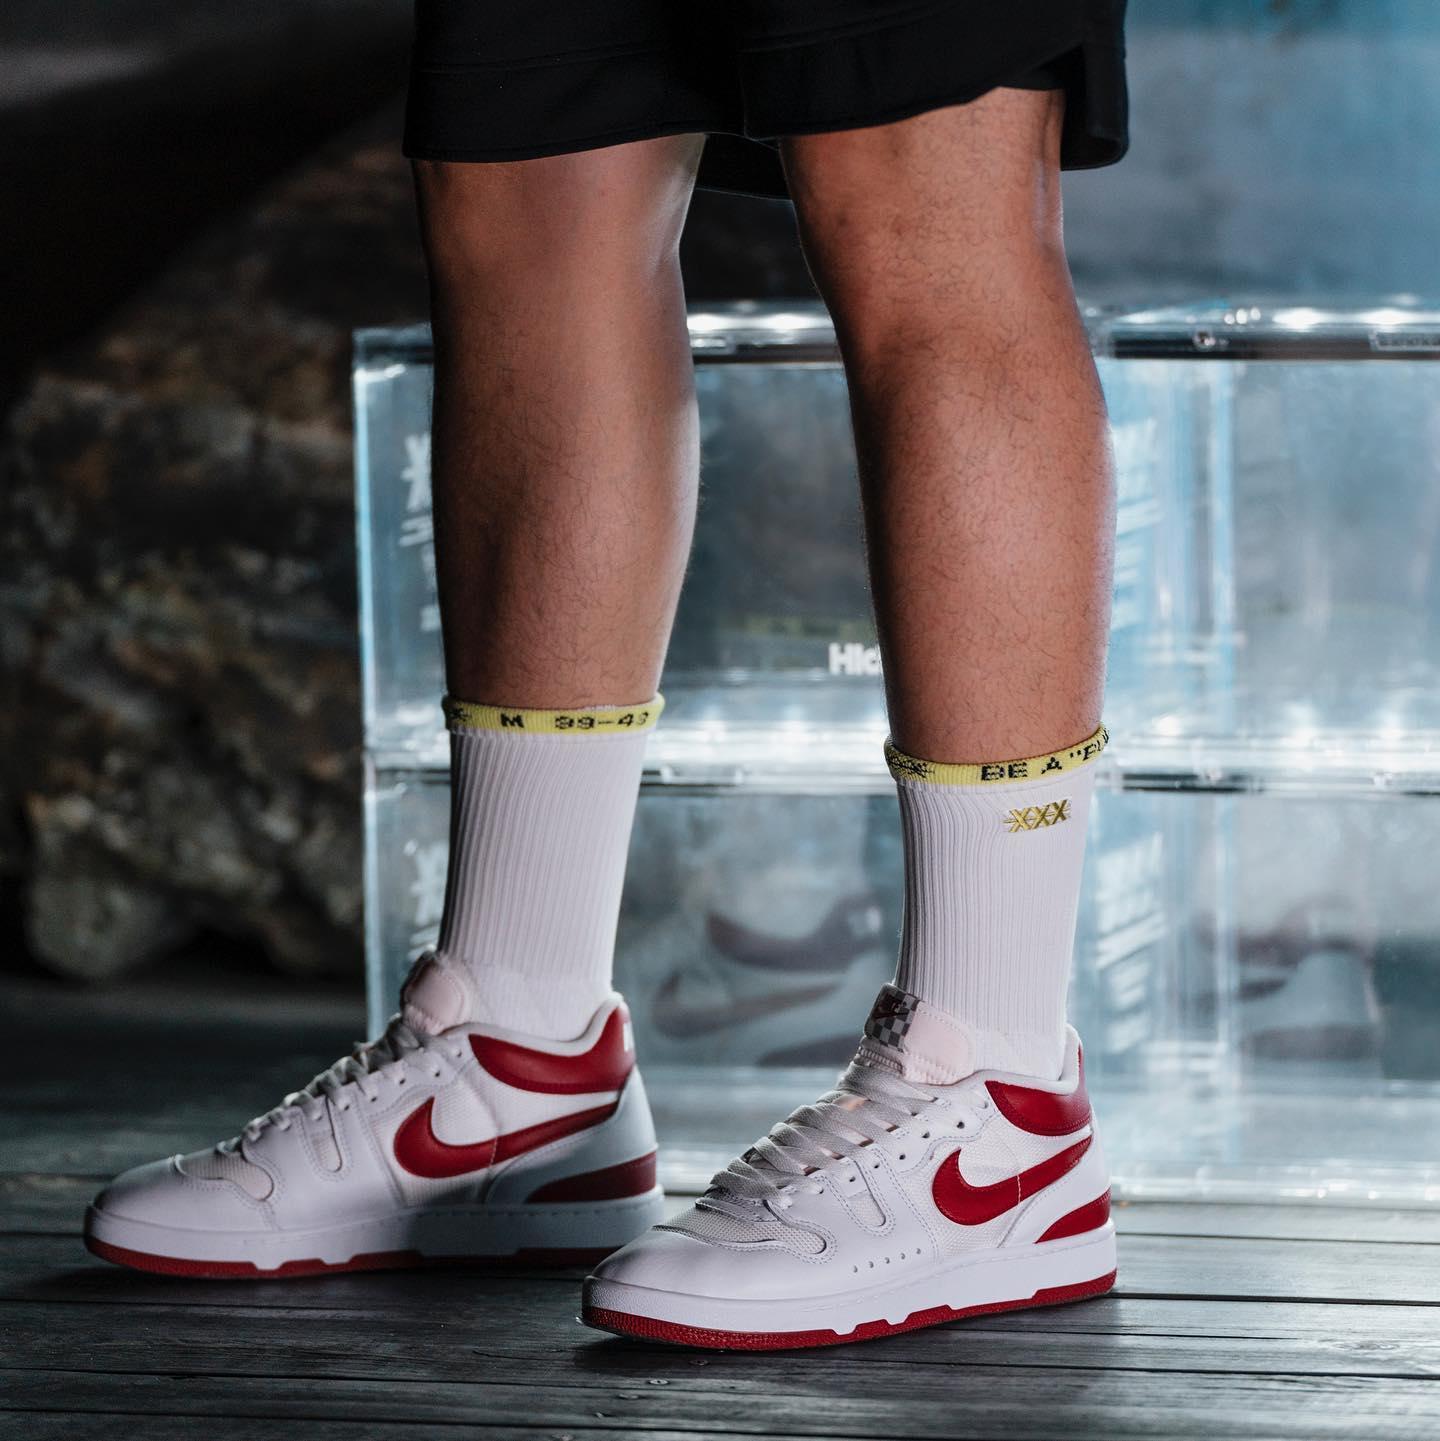 Nike Mac Attack Red Crush on feet